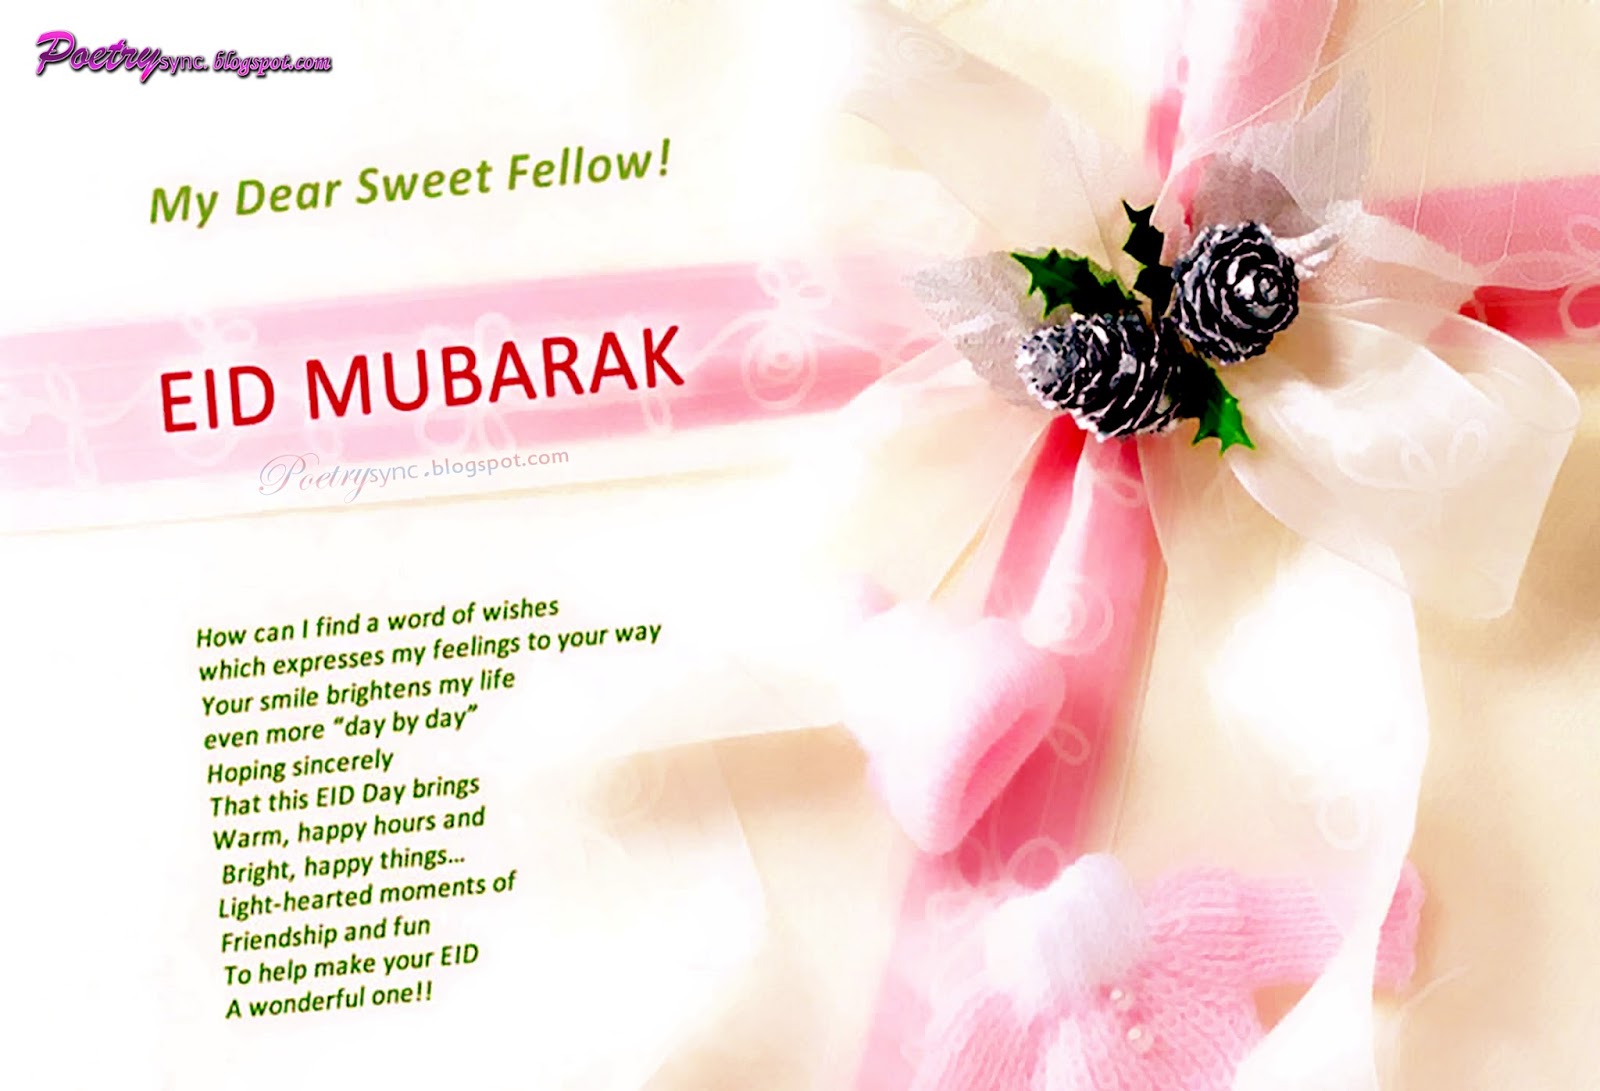 Eid mubarak перевод. Wishes for Eid Mubarak. ИД мубарак. Аид мубарак поздравление.